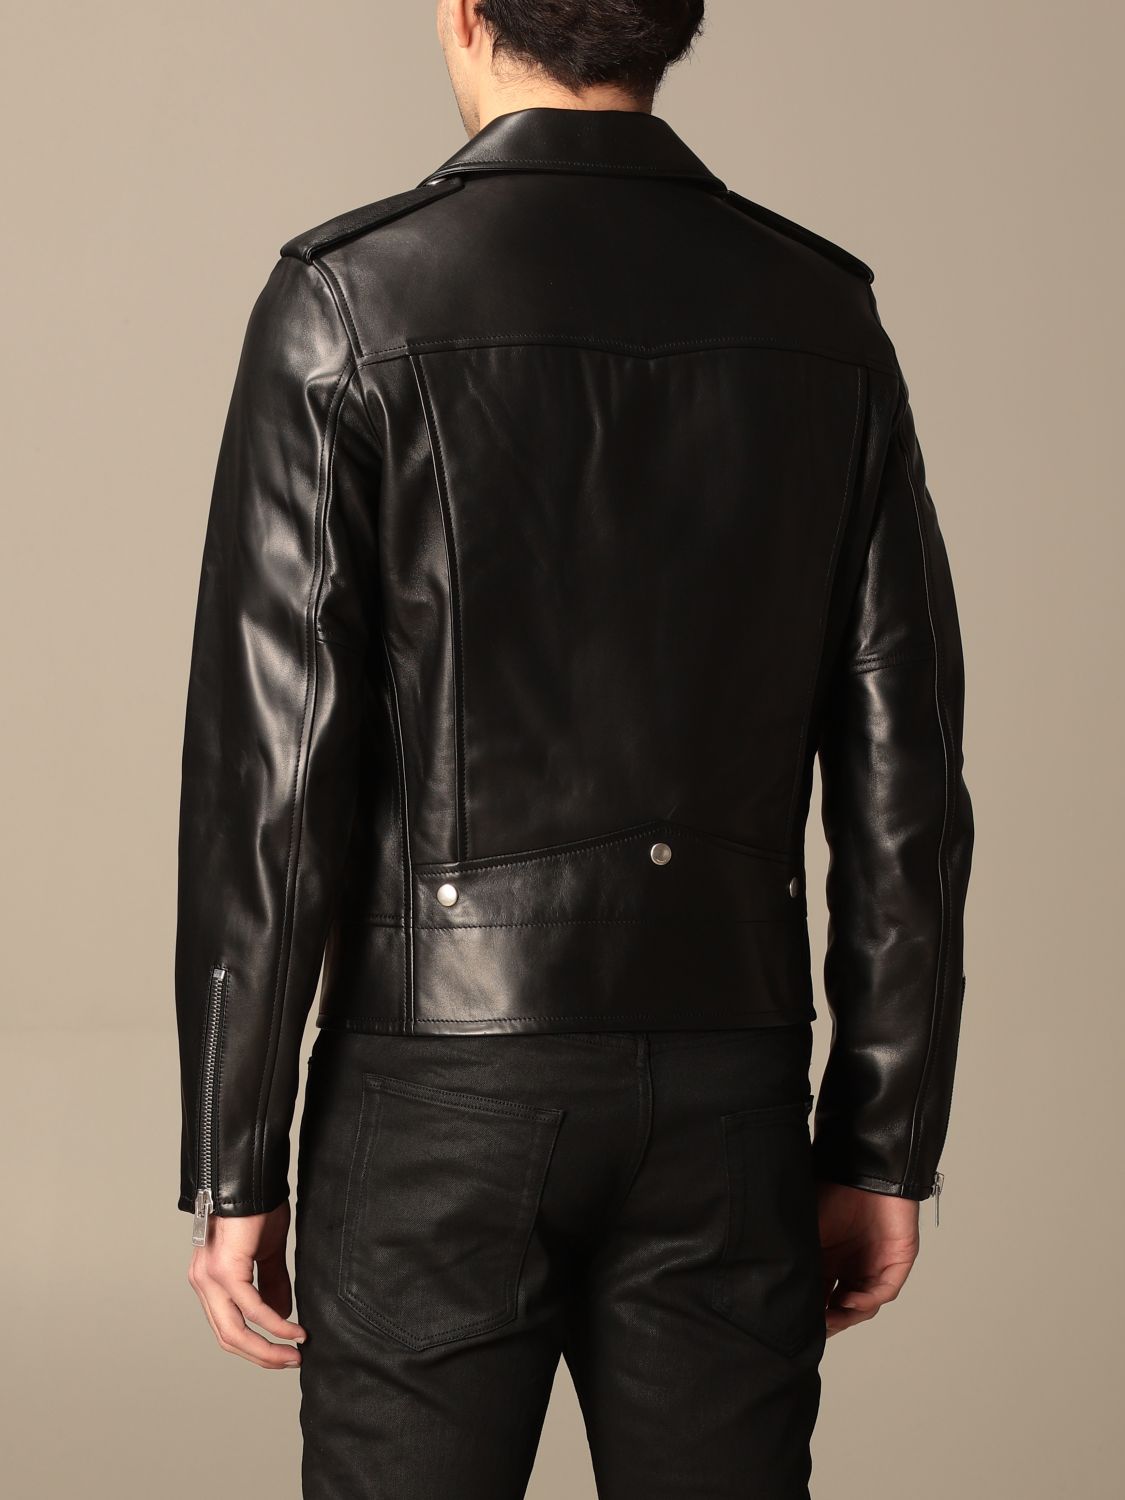 Saint Laurent full zip leather jacket